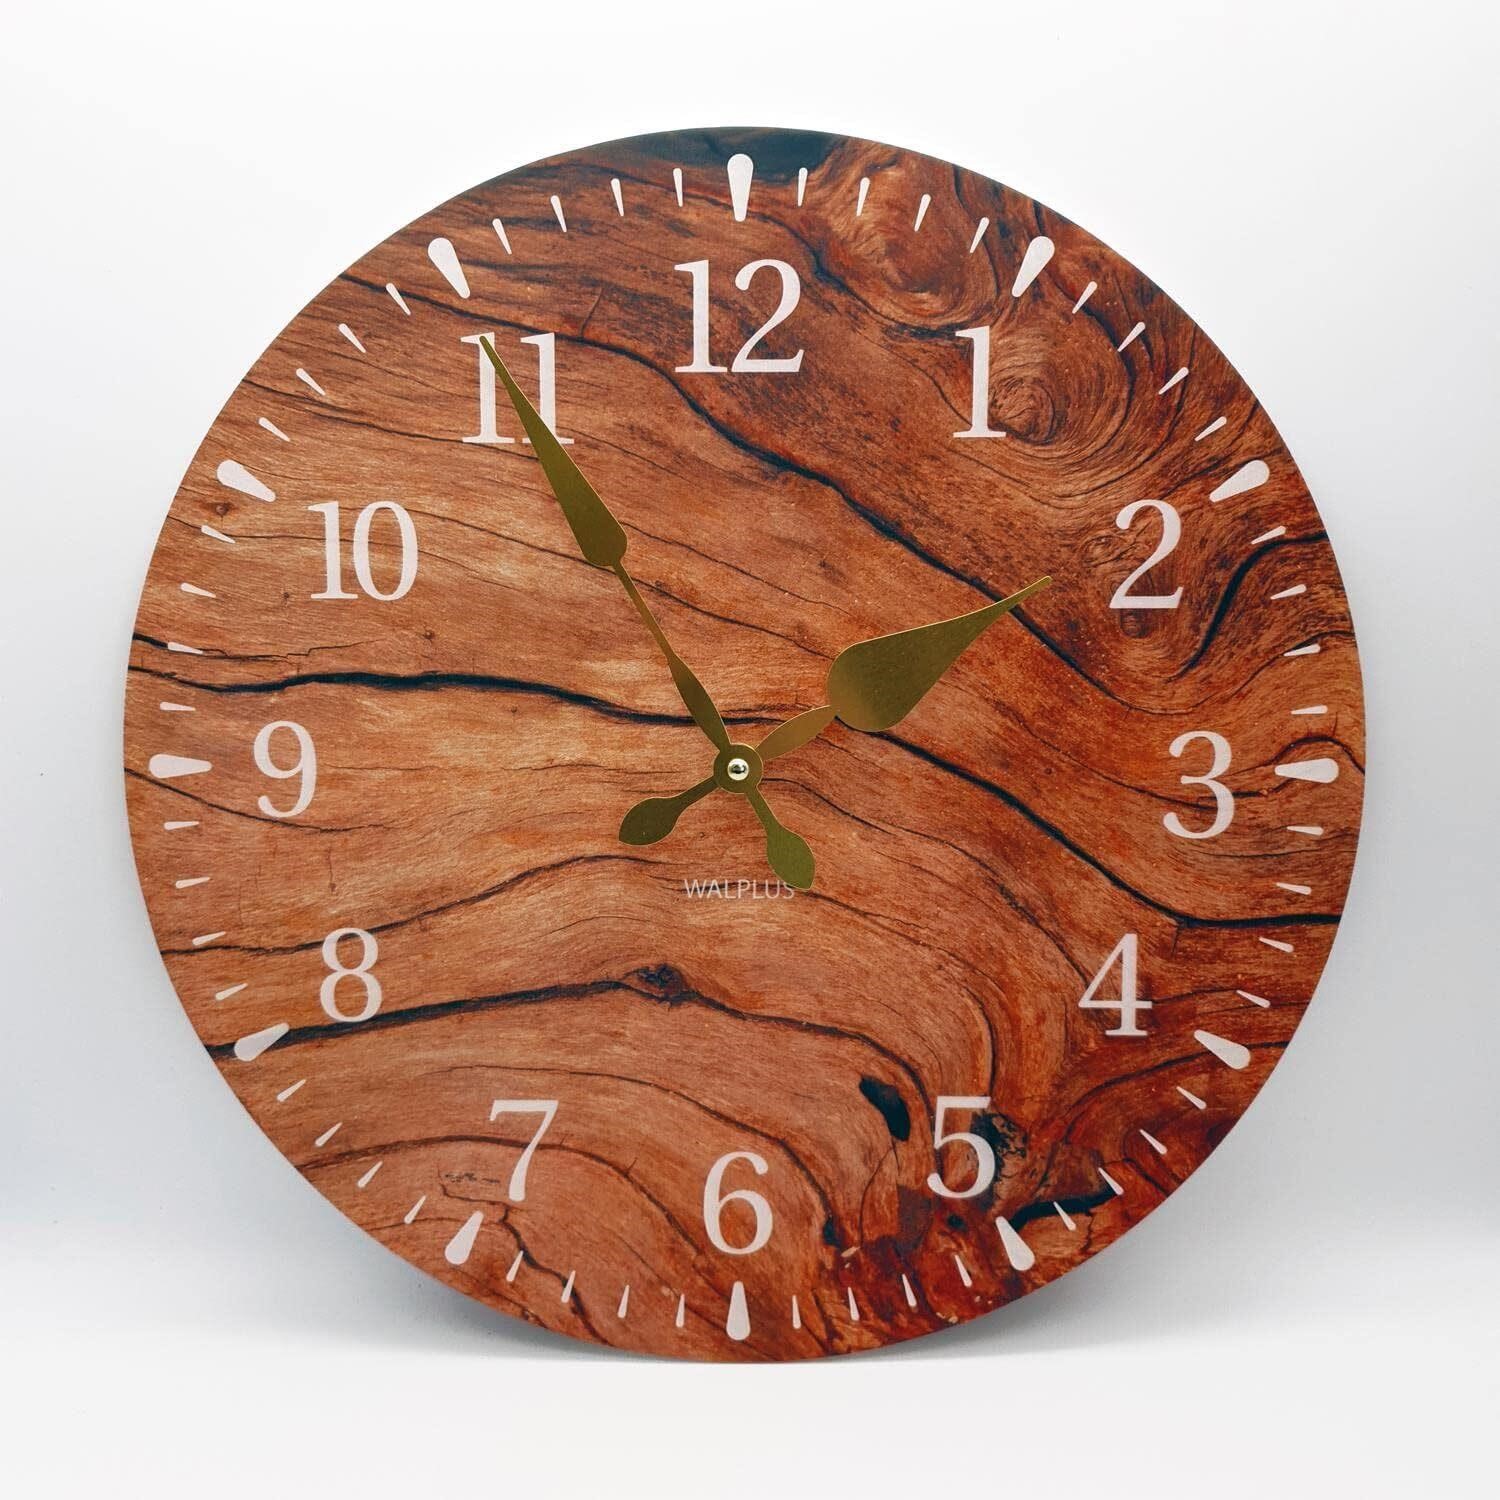 15.7 Inch Wooden Rustic Silent Wall Clock - Walnut